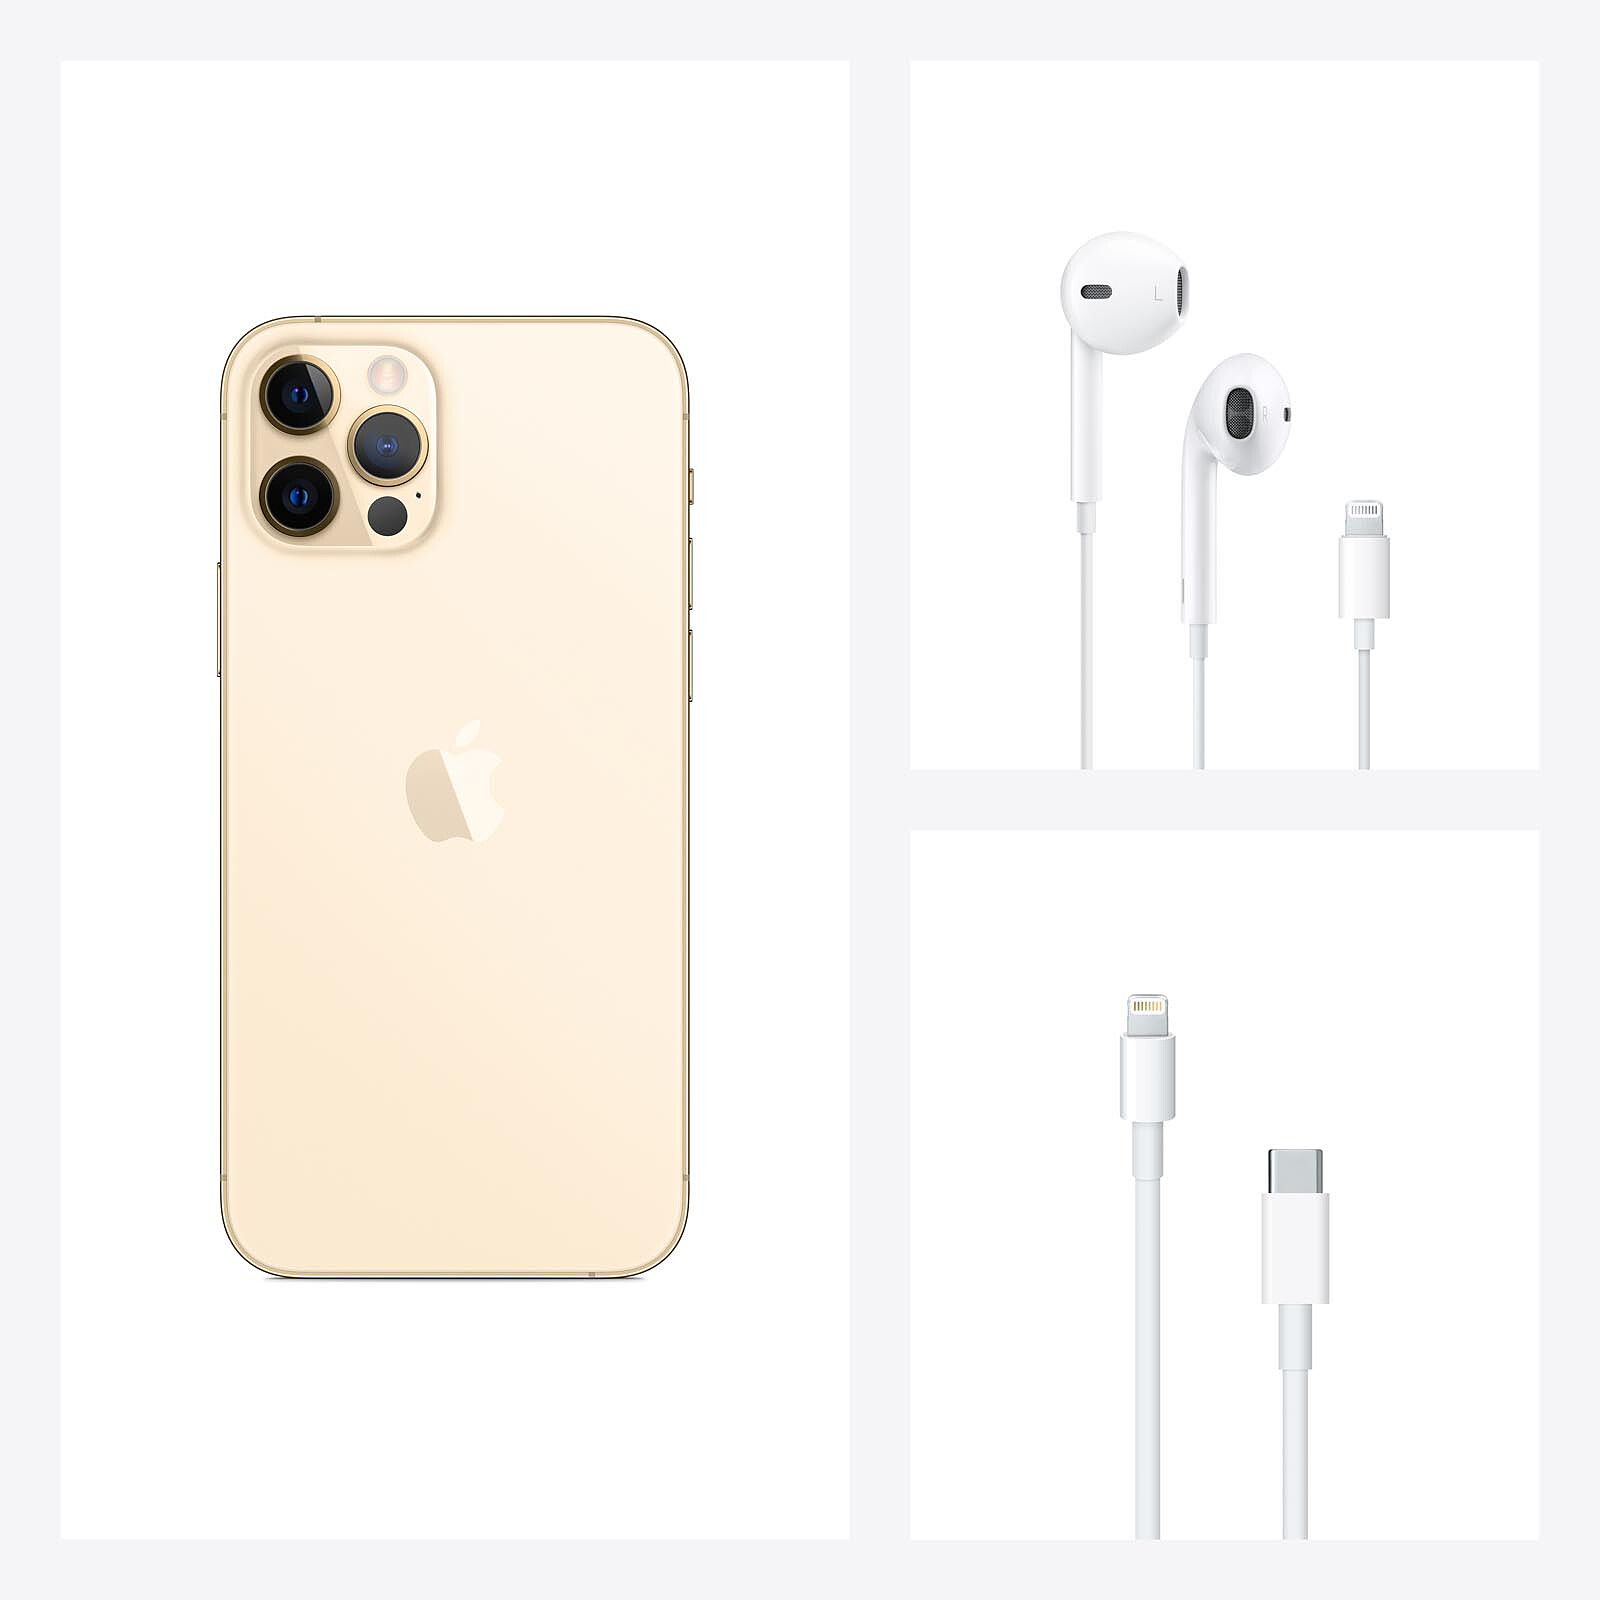 Apple iPhone 12 Pro Max 256GB Gold - Móvil y smartphone - LDLC